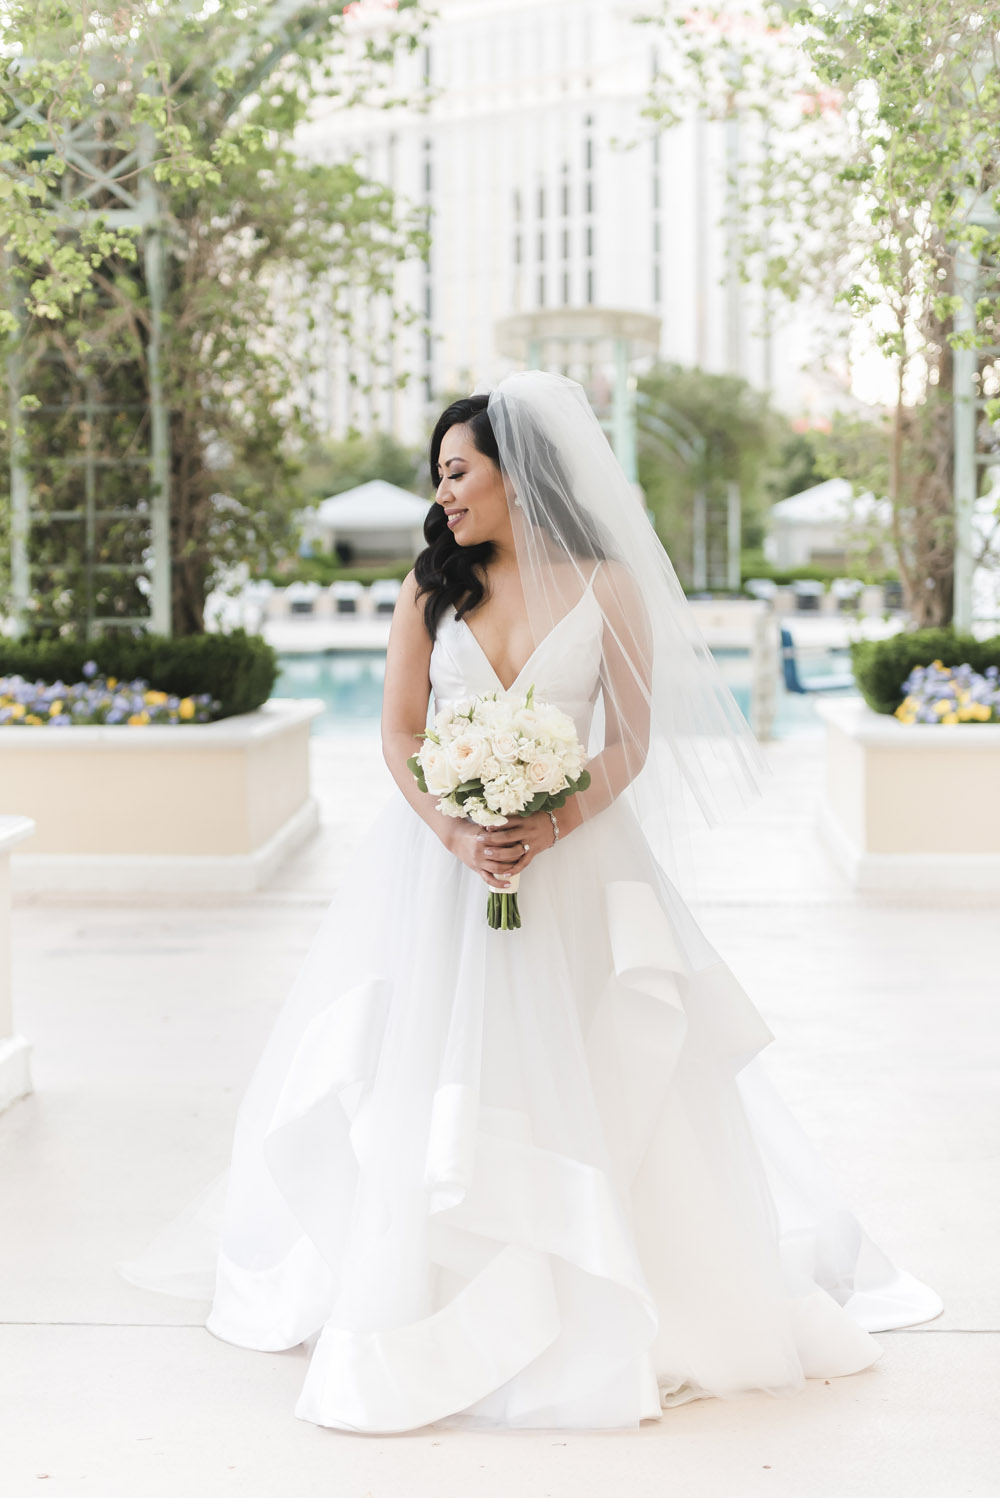 Sam + Vilay | Paris Las Vegas Wedding | Kristen Marie Weddings + Portraits, Las Vegas Wedding Photographer